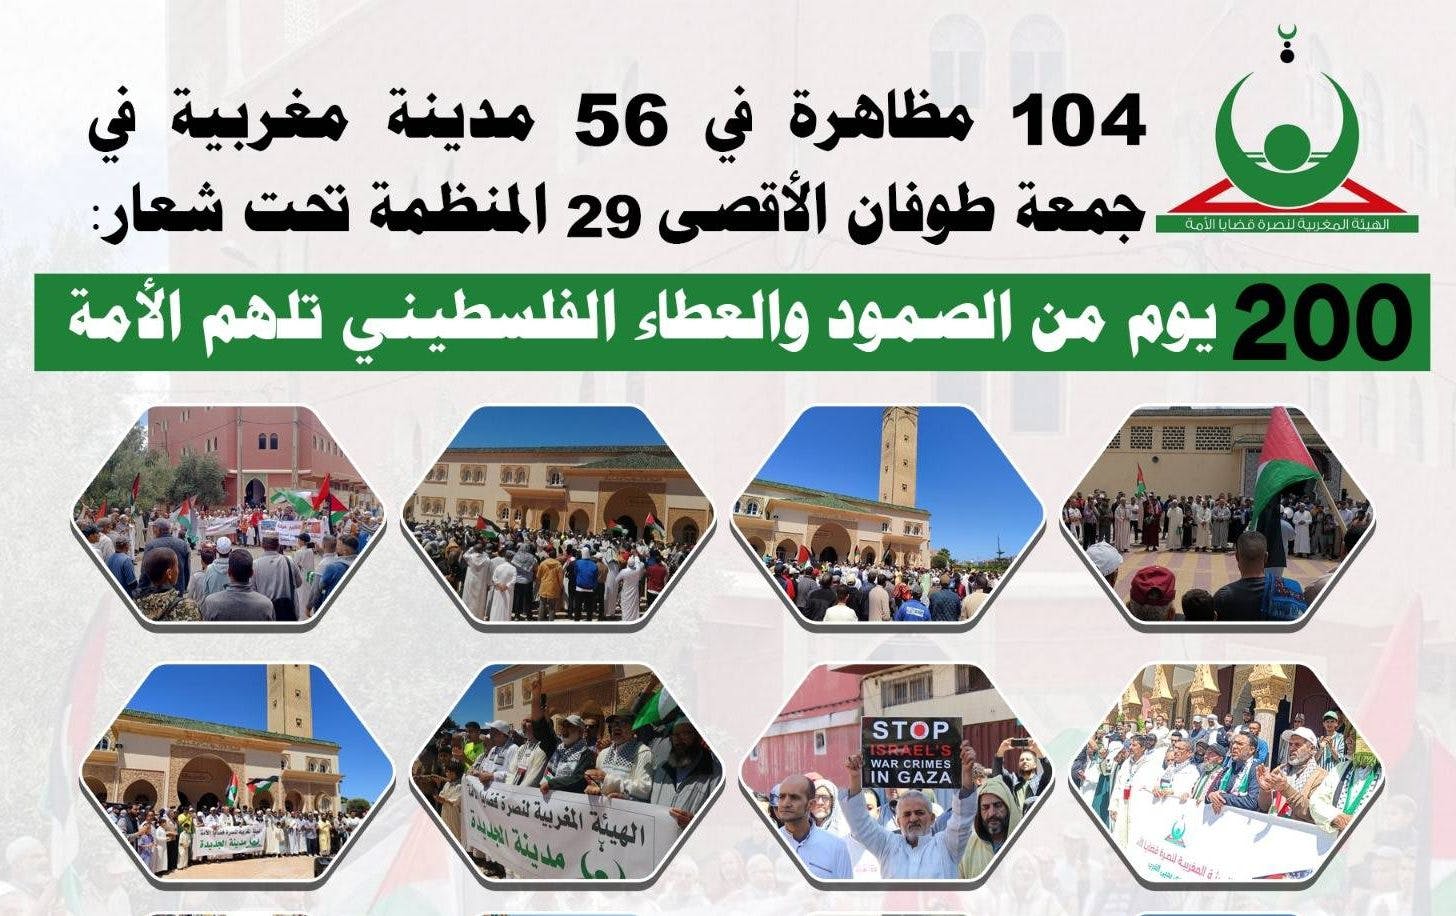 Cover Image for “هيئة النصرة”: 104 مظاهرات في 56 مدينة مغربية في جمعة طوفان الأقصى 29 (بلاغ)